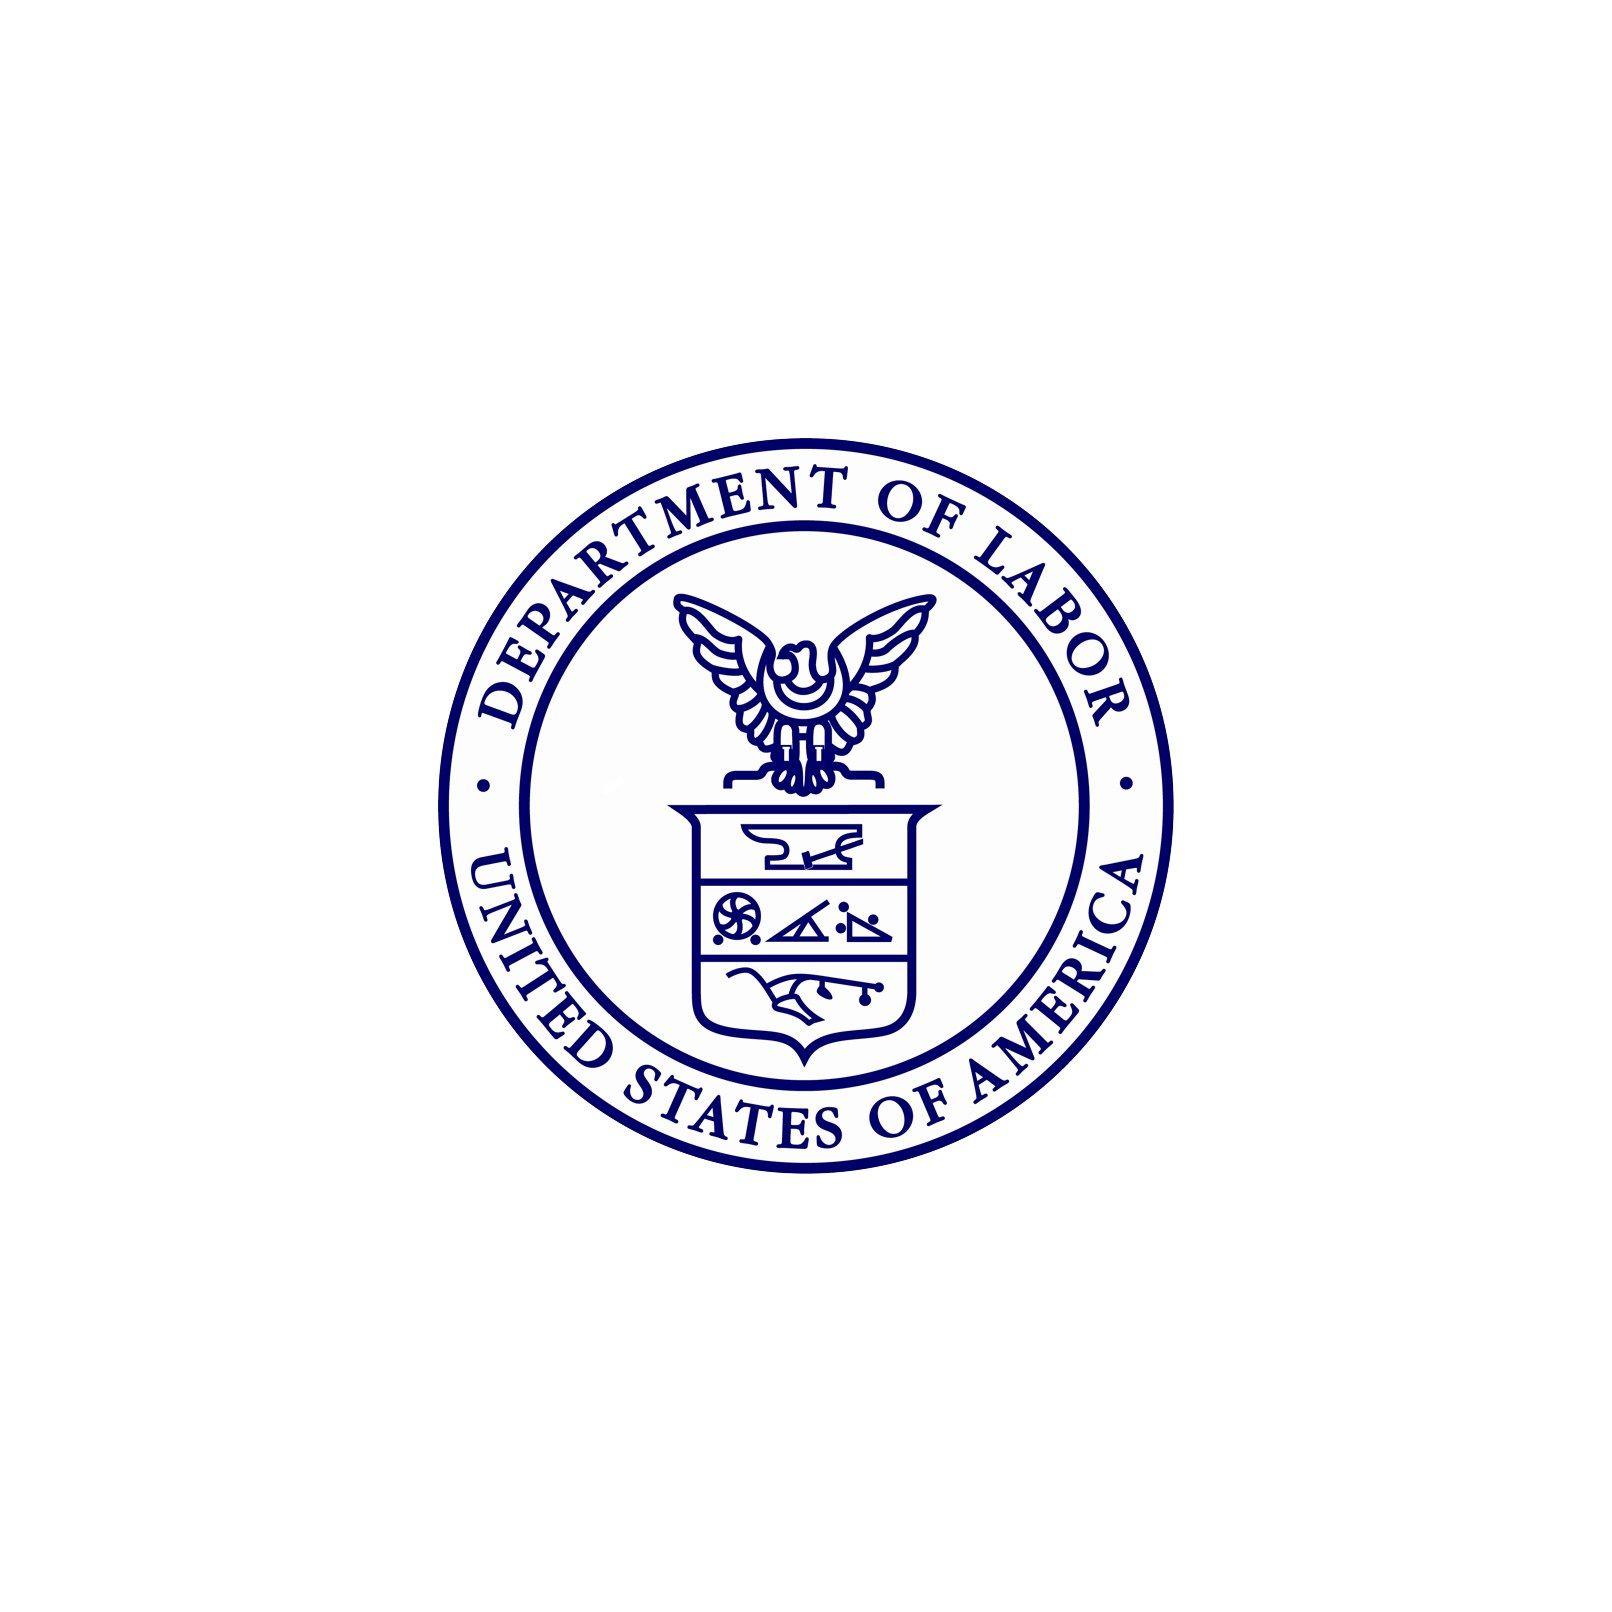 DOL Logo - Department of Labor Logoé